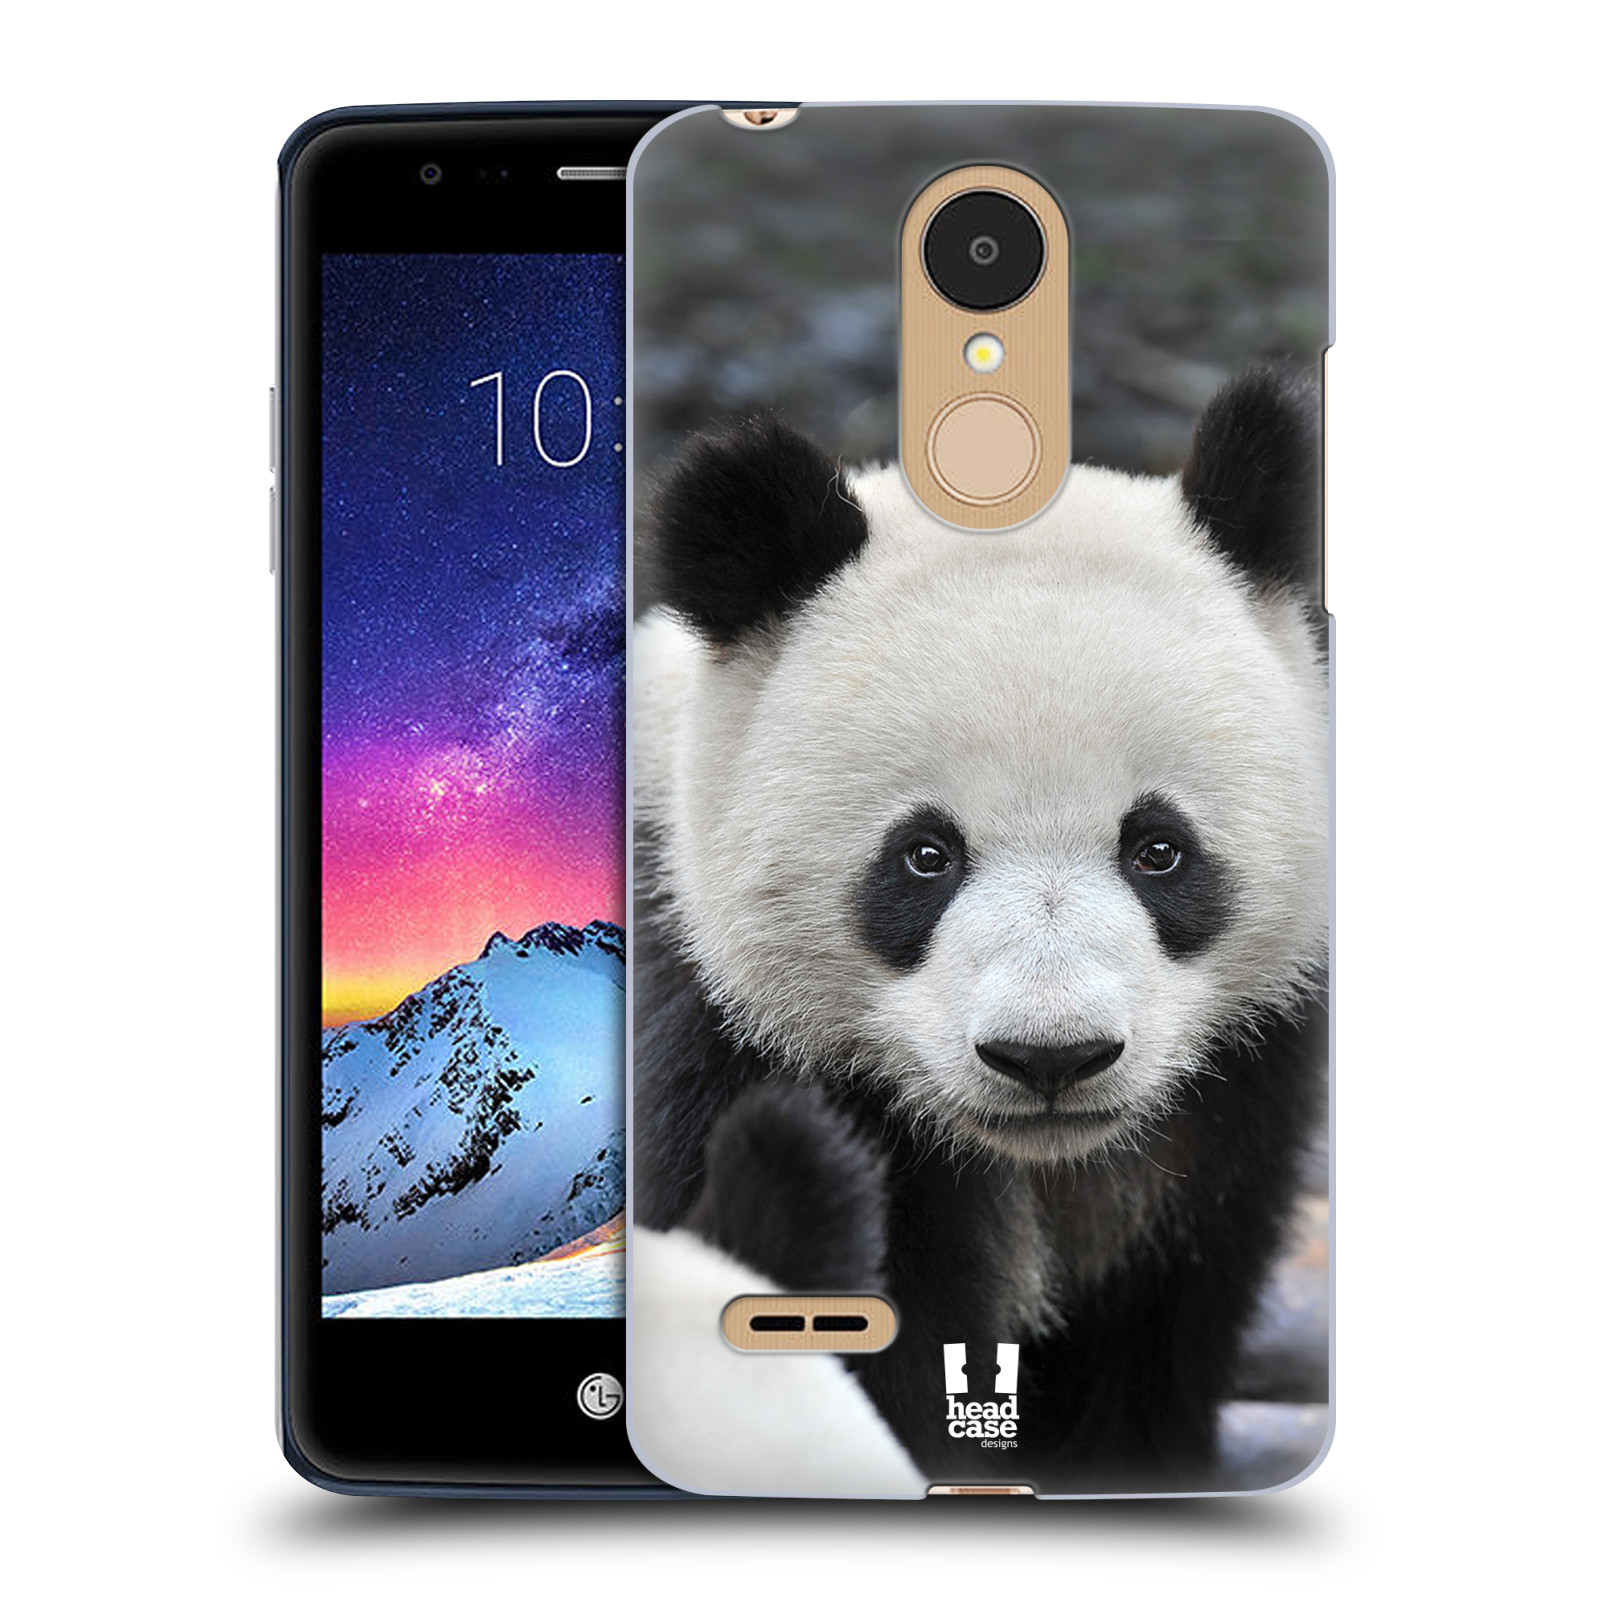 HEAD CASE plastový obal na mobil LG K9 / K8 2018 vzor Divočina, Divoký život a zvířata foto MEDVĚD PANDA